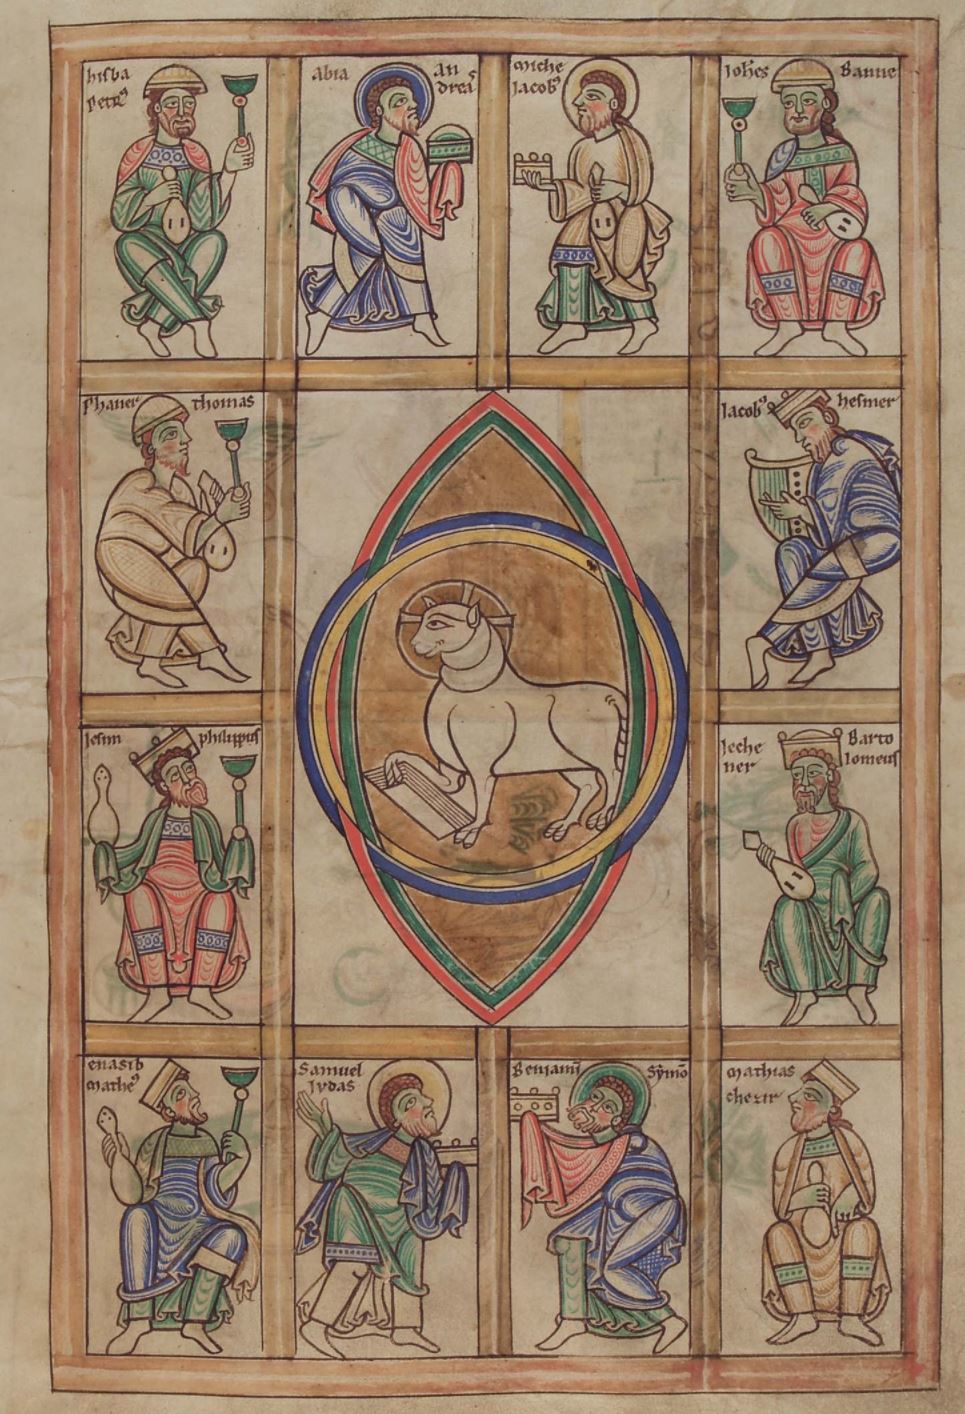 1150-75 Liber floridus Herzog August Bibliothek Cod. Guelf. 1 Gud. lat 2 11r Apocalypse